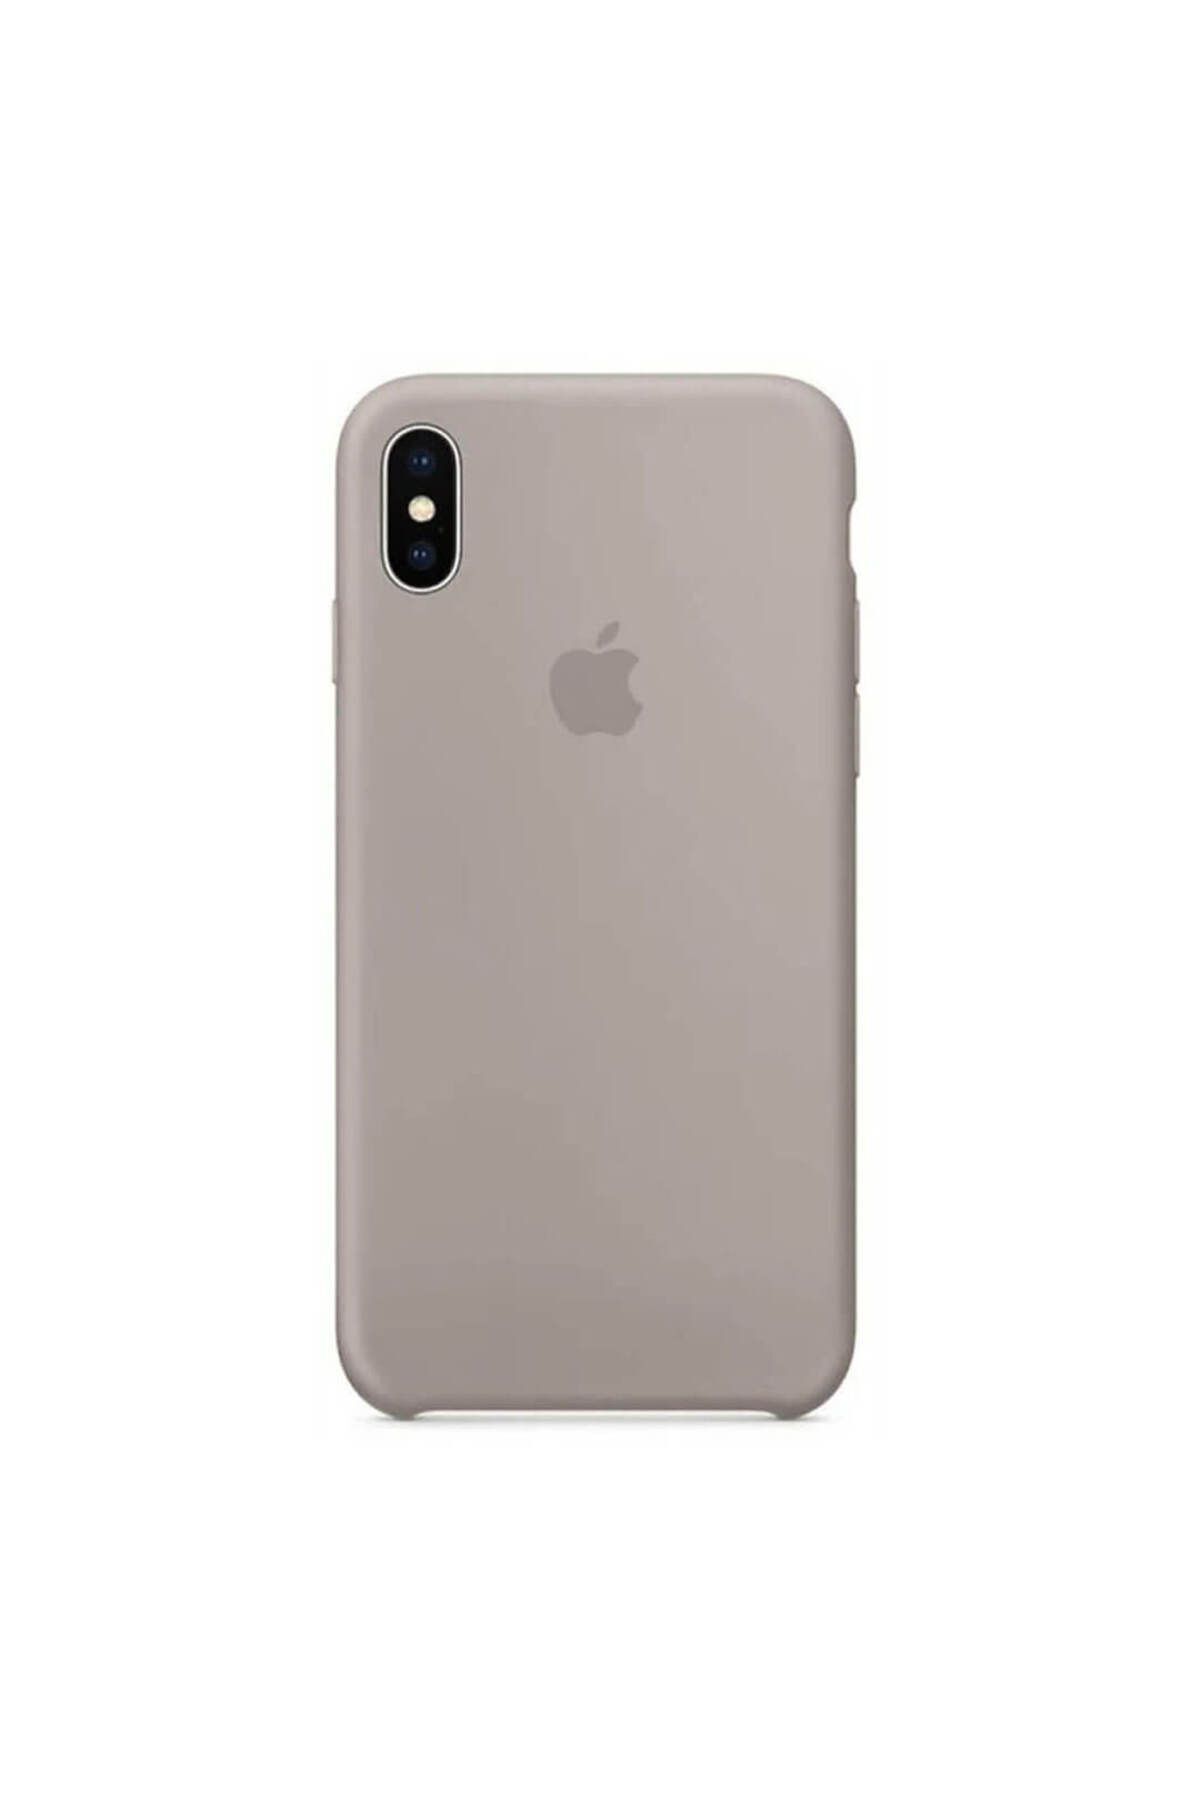 Stendhal iPhone XR ile uyumlu Kılıf A+ Deluxe Class (Limited Stock) - Taş Gri